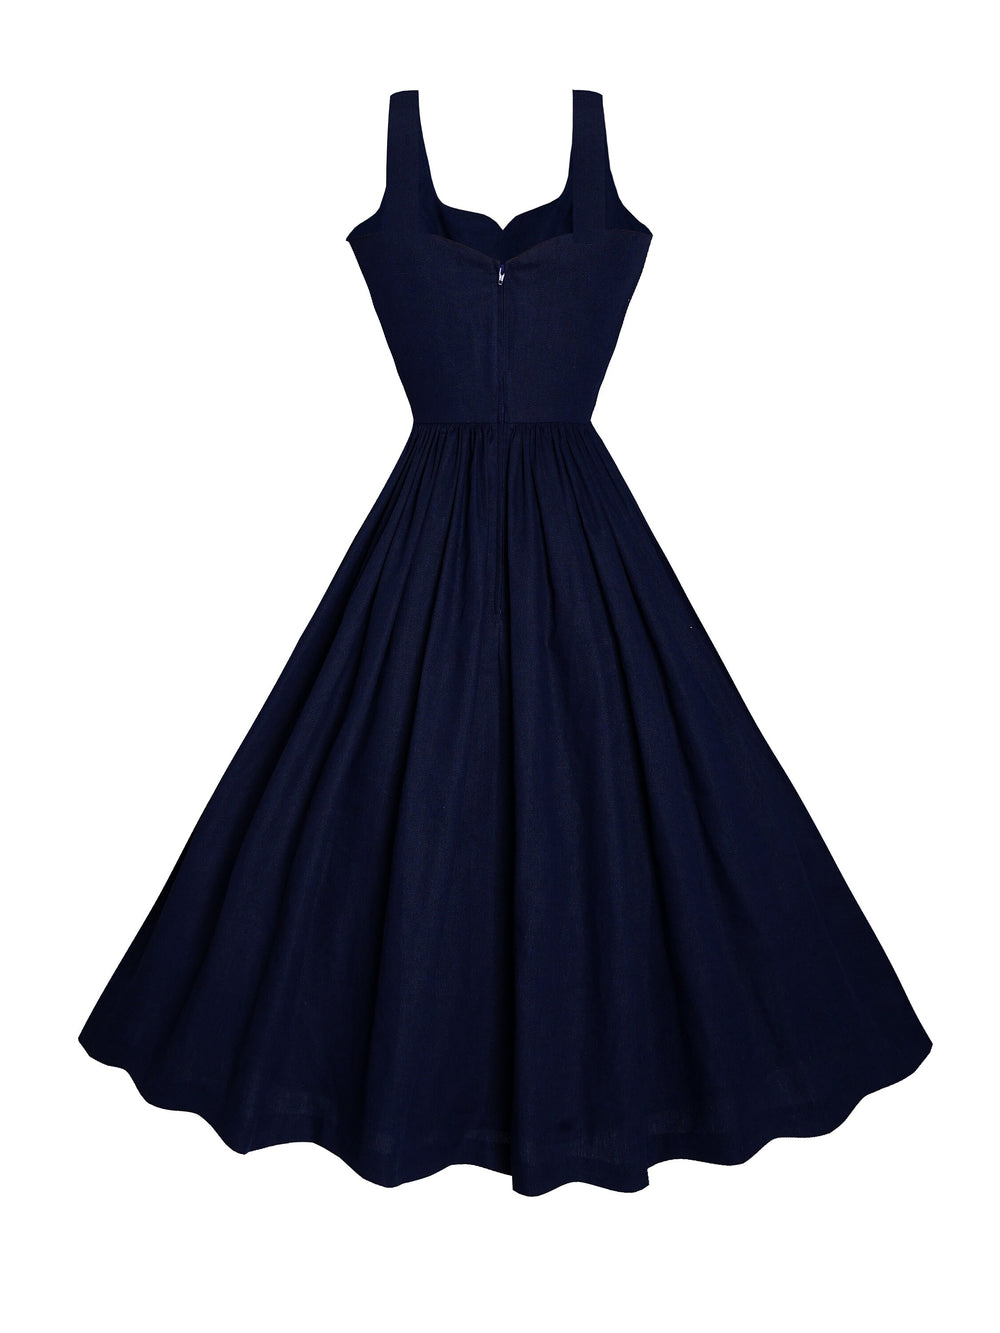 MTO - Elizabeth Dress in Indigo Blue Linen